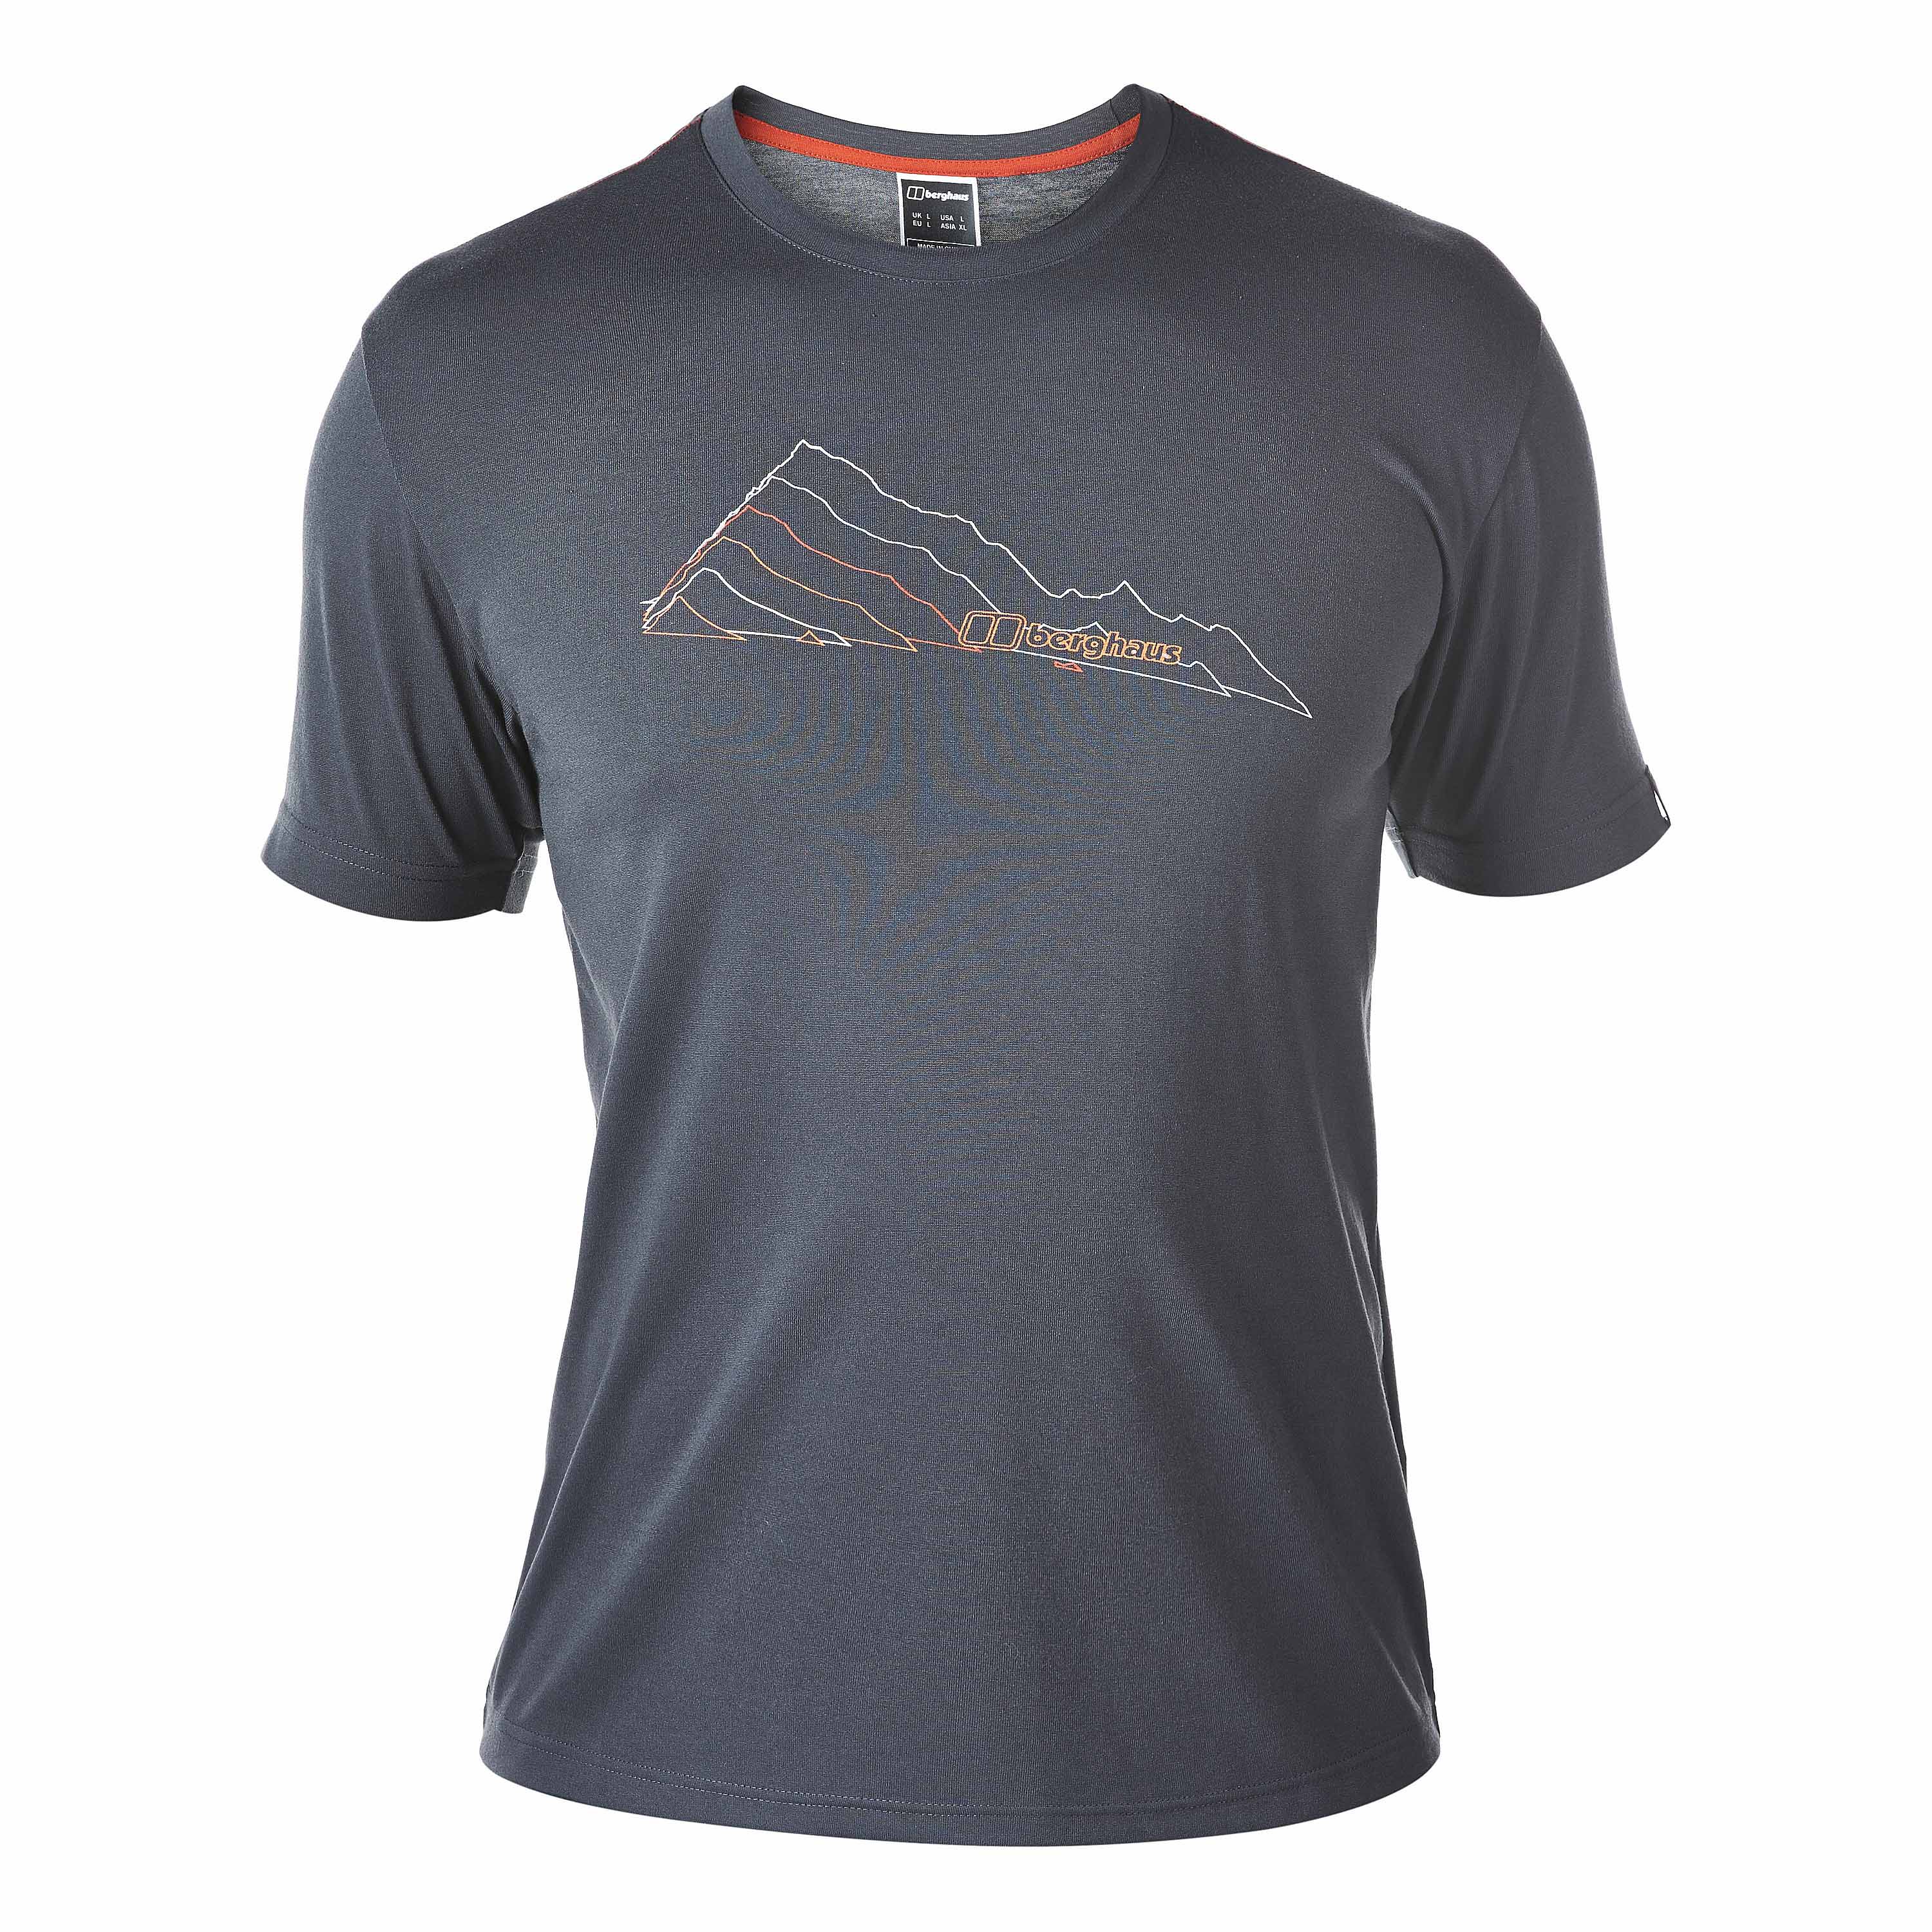 Berghaus T-Shirt Layered Mountain carbon | Berghaus T-Shirt Layered ...